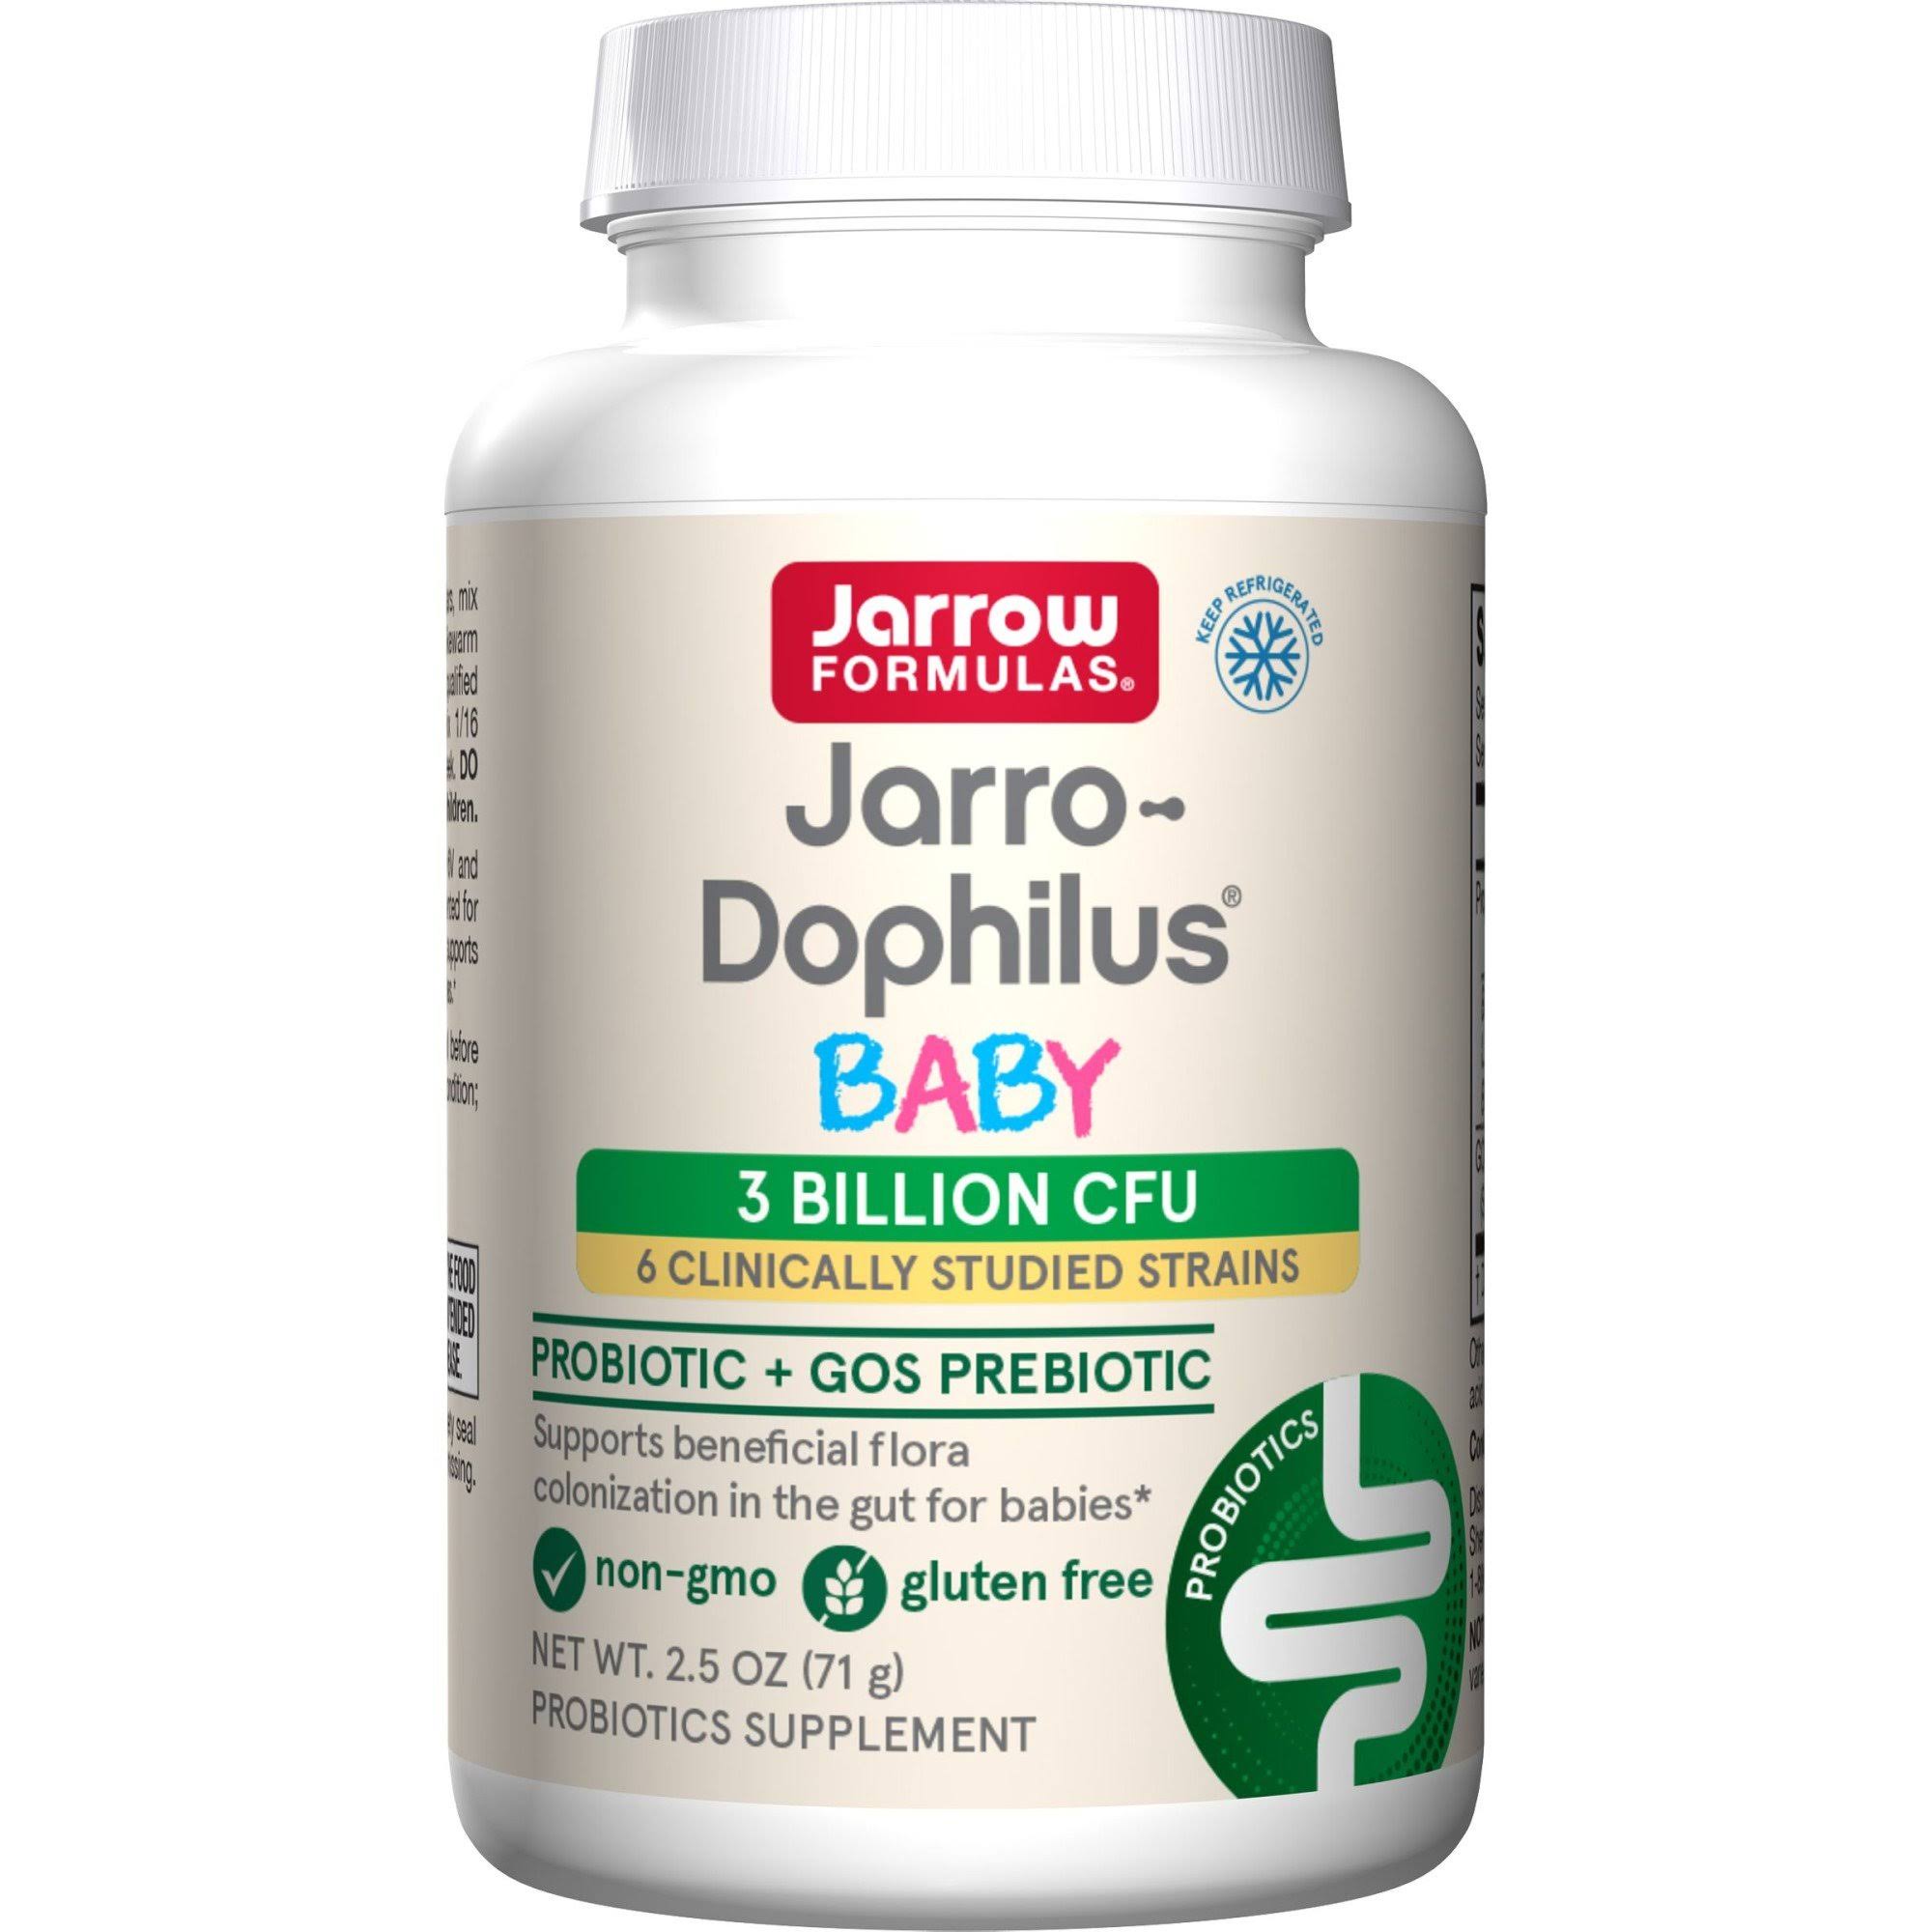 Jarrow Formulations Baby's Jarro Dophilus Probiotic Supplement - 71g